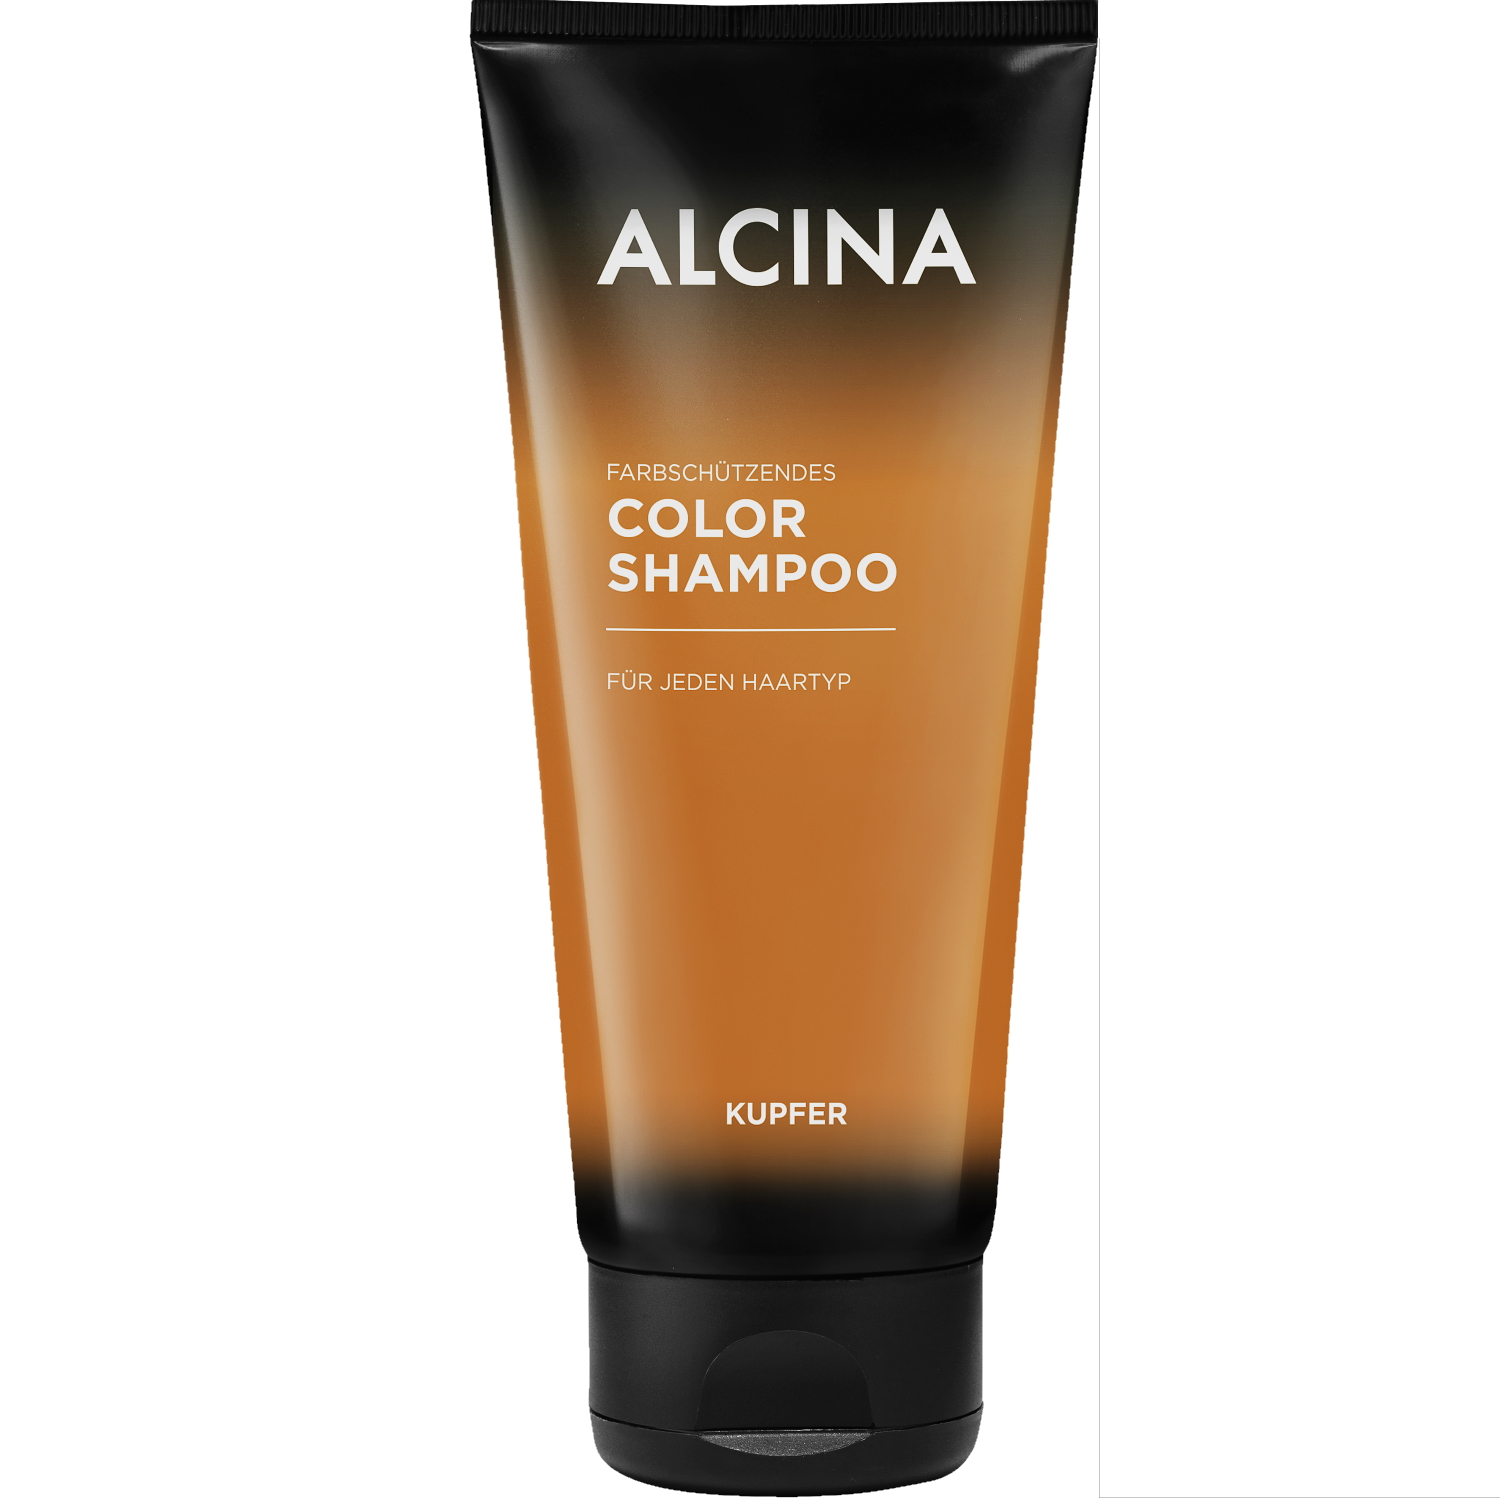 Alcina Color Shampoo Kupfer 200ml